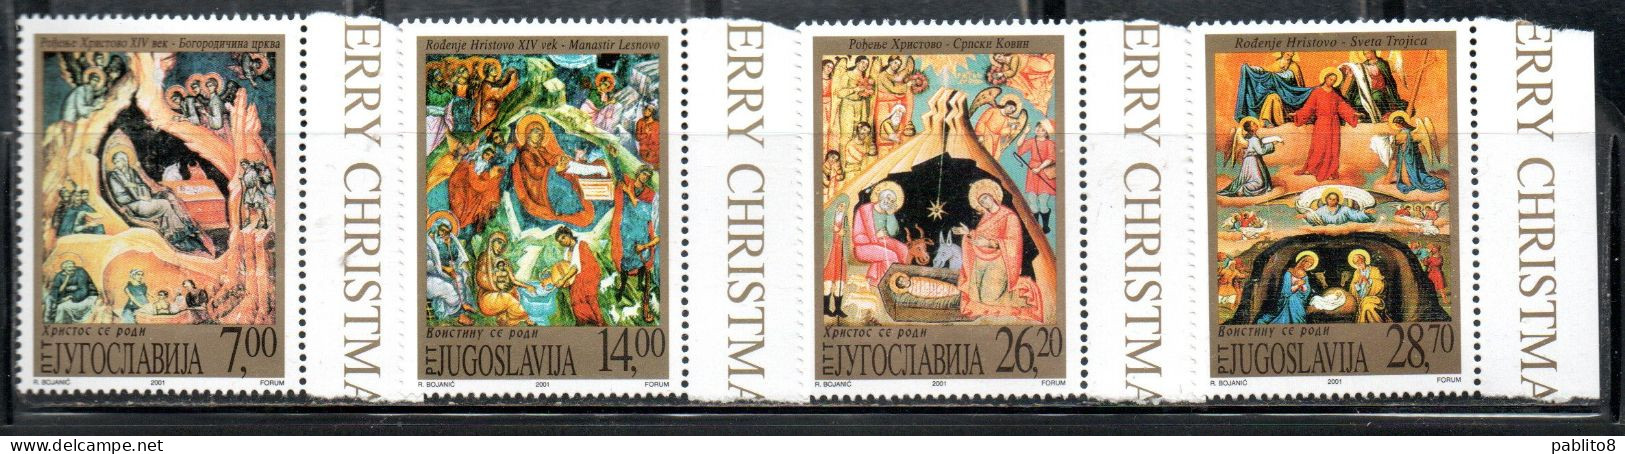 JUGOSLAVIA YUGOSLAVIA 2001 CHRISTMAS NATALE NOEL WEIHNACHTEN NAVIDAD COMPLETE SET SERIE COMPLETA MNH - Unused Stamps